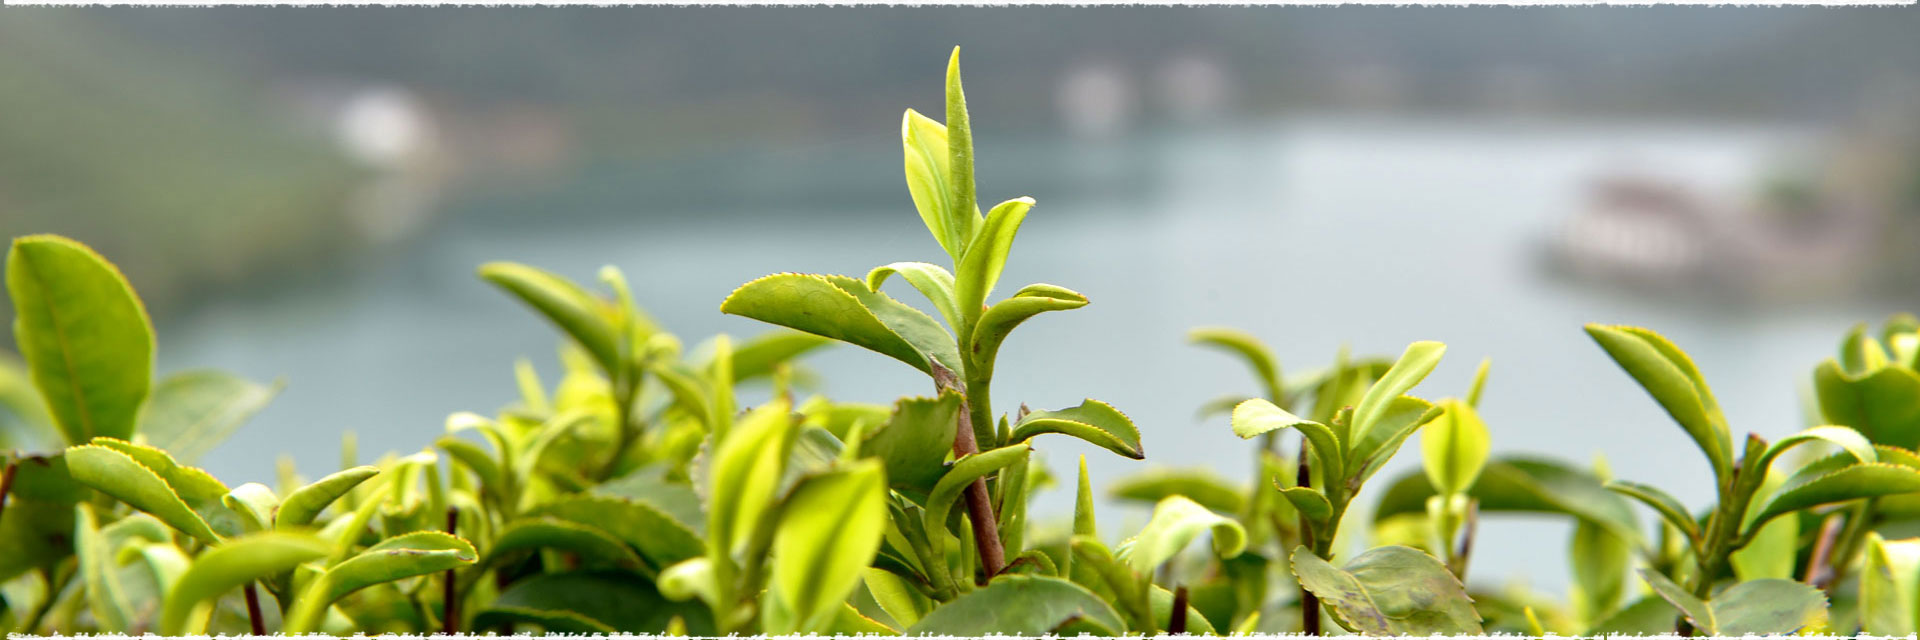 How to Process Green Tea